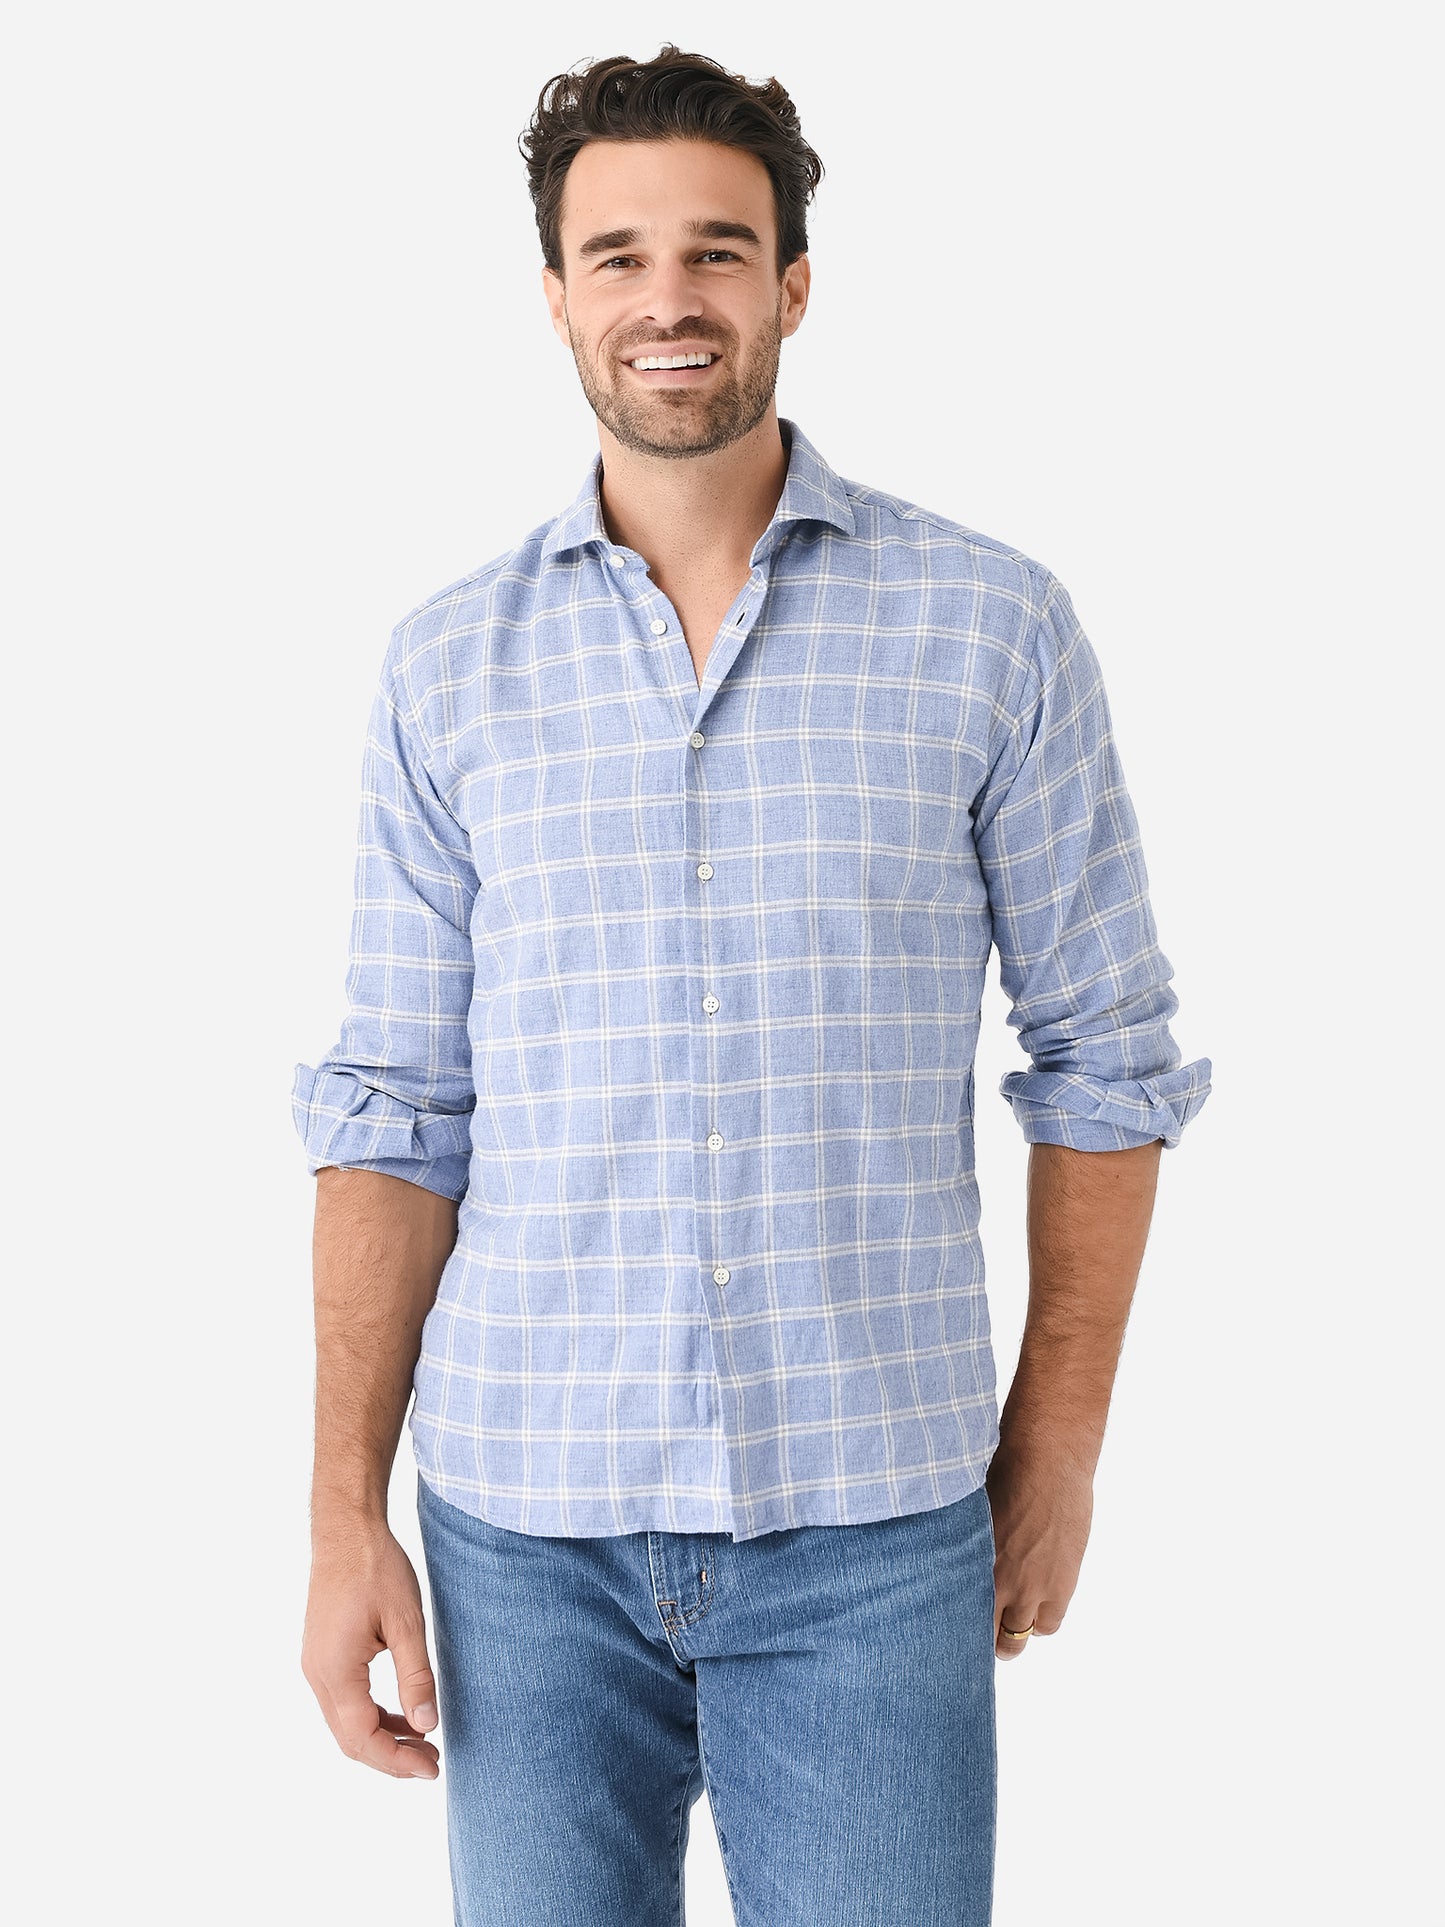 Miller Westby Men's Sauk Button-Down Shirt